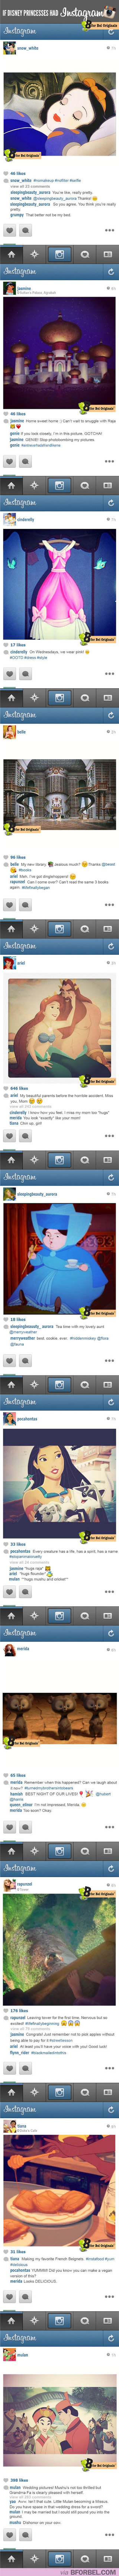 If-The-Disney-Princesses-Used-Instagram-1